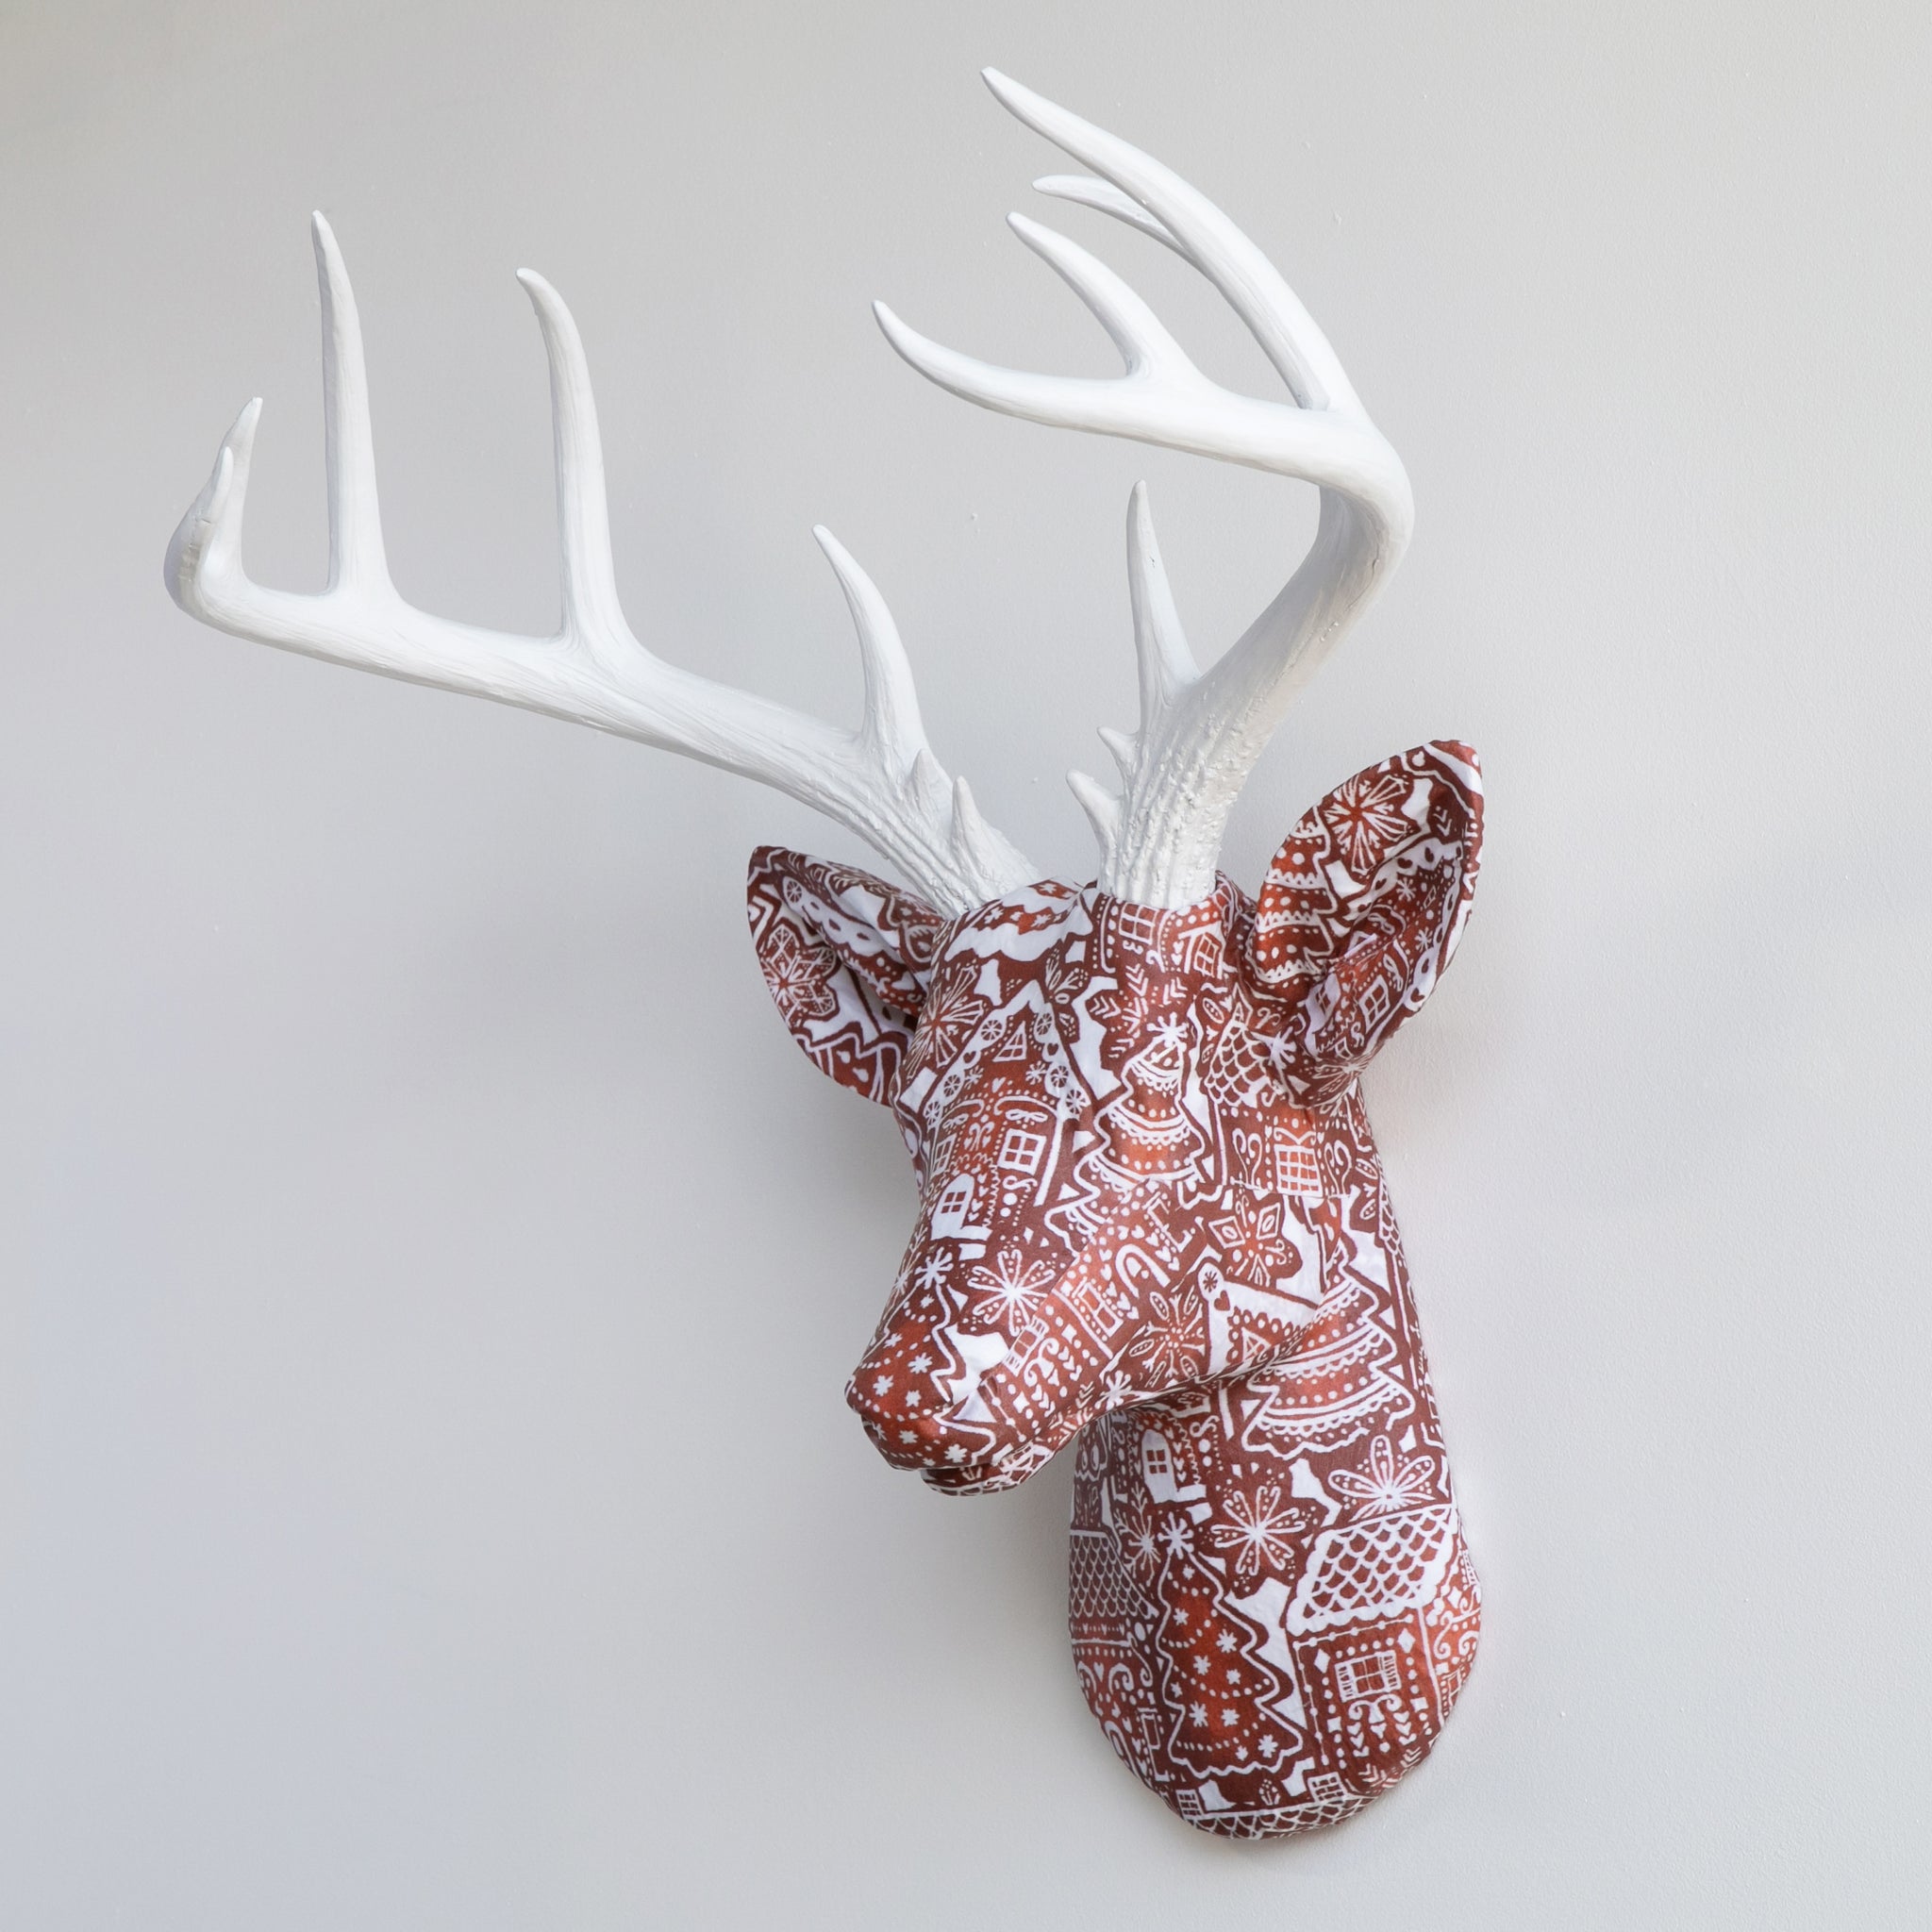 Fabric Deer Head - Gingerbread Fabric Deer Head